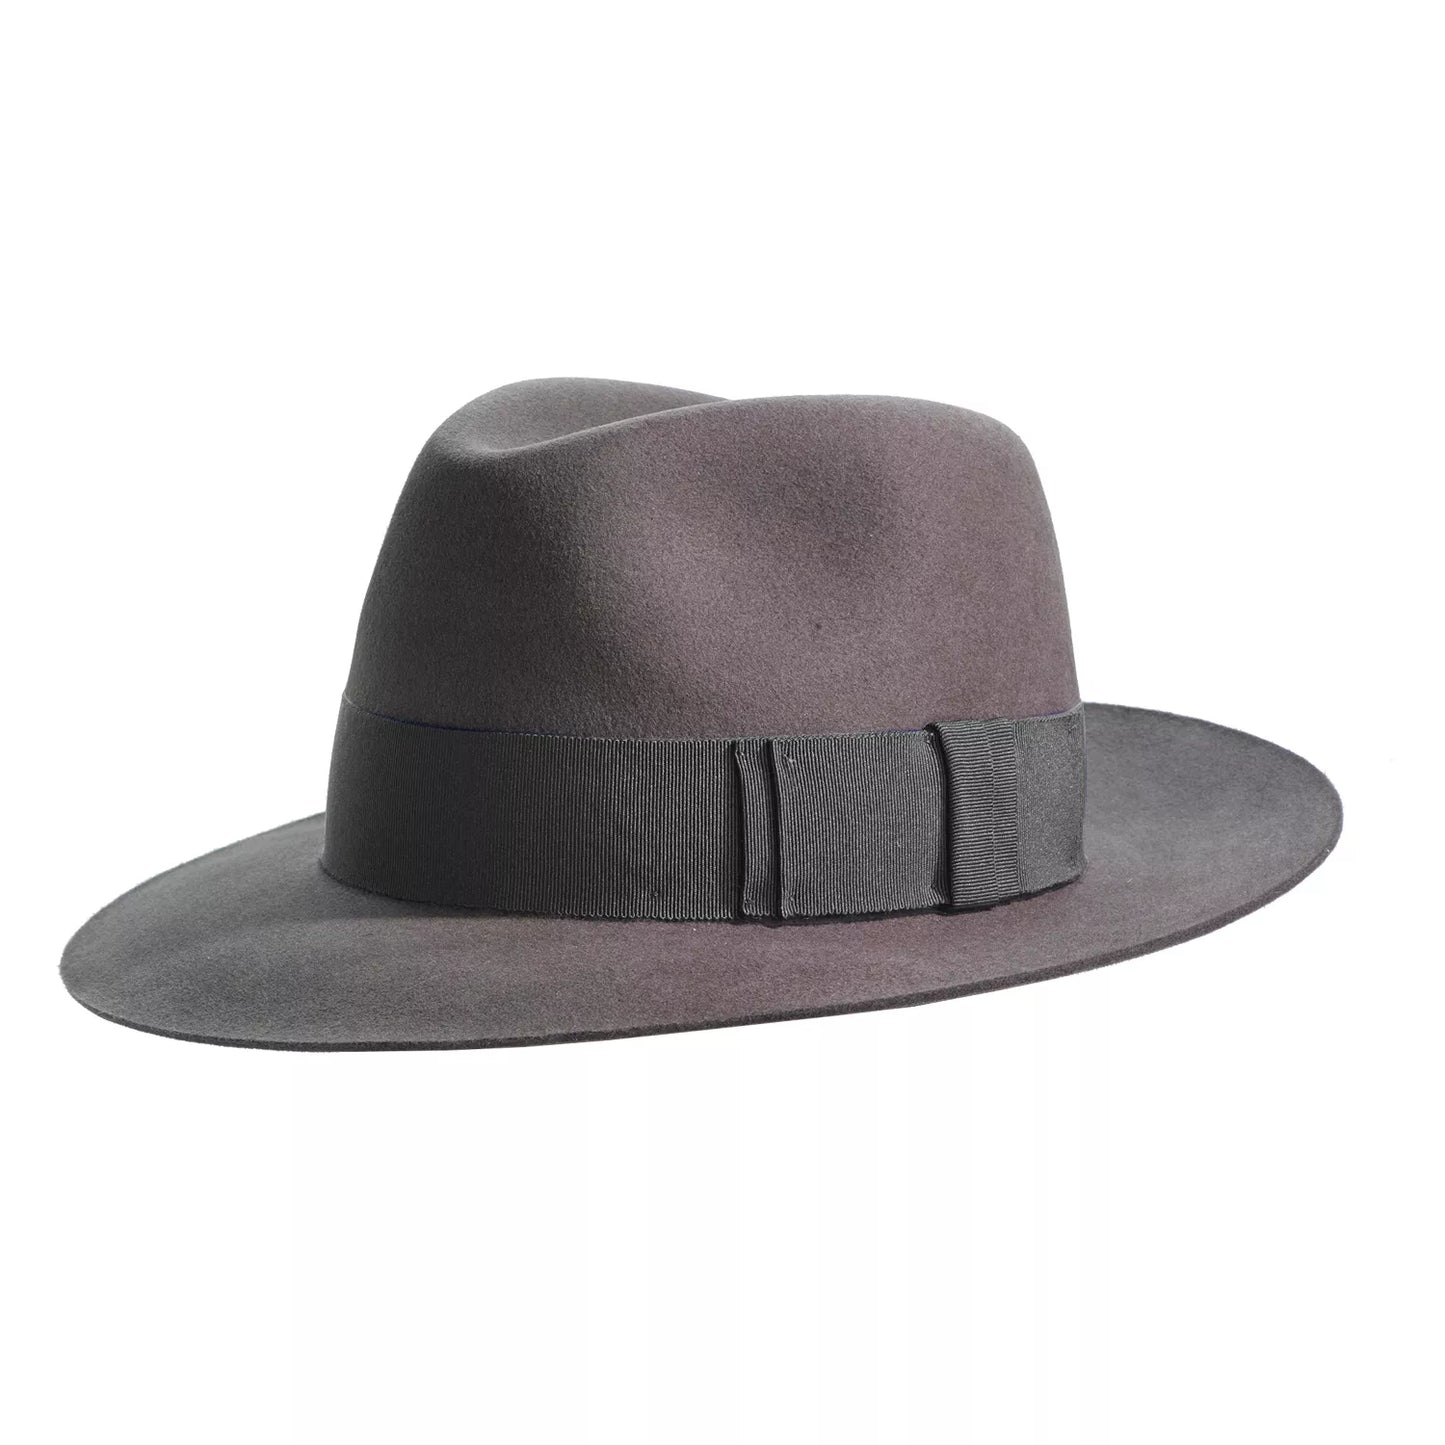 El sombrero Fedora de Manhattan